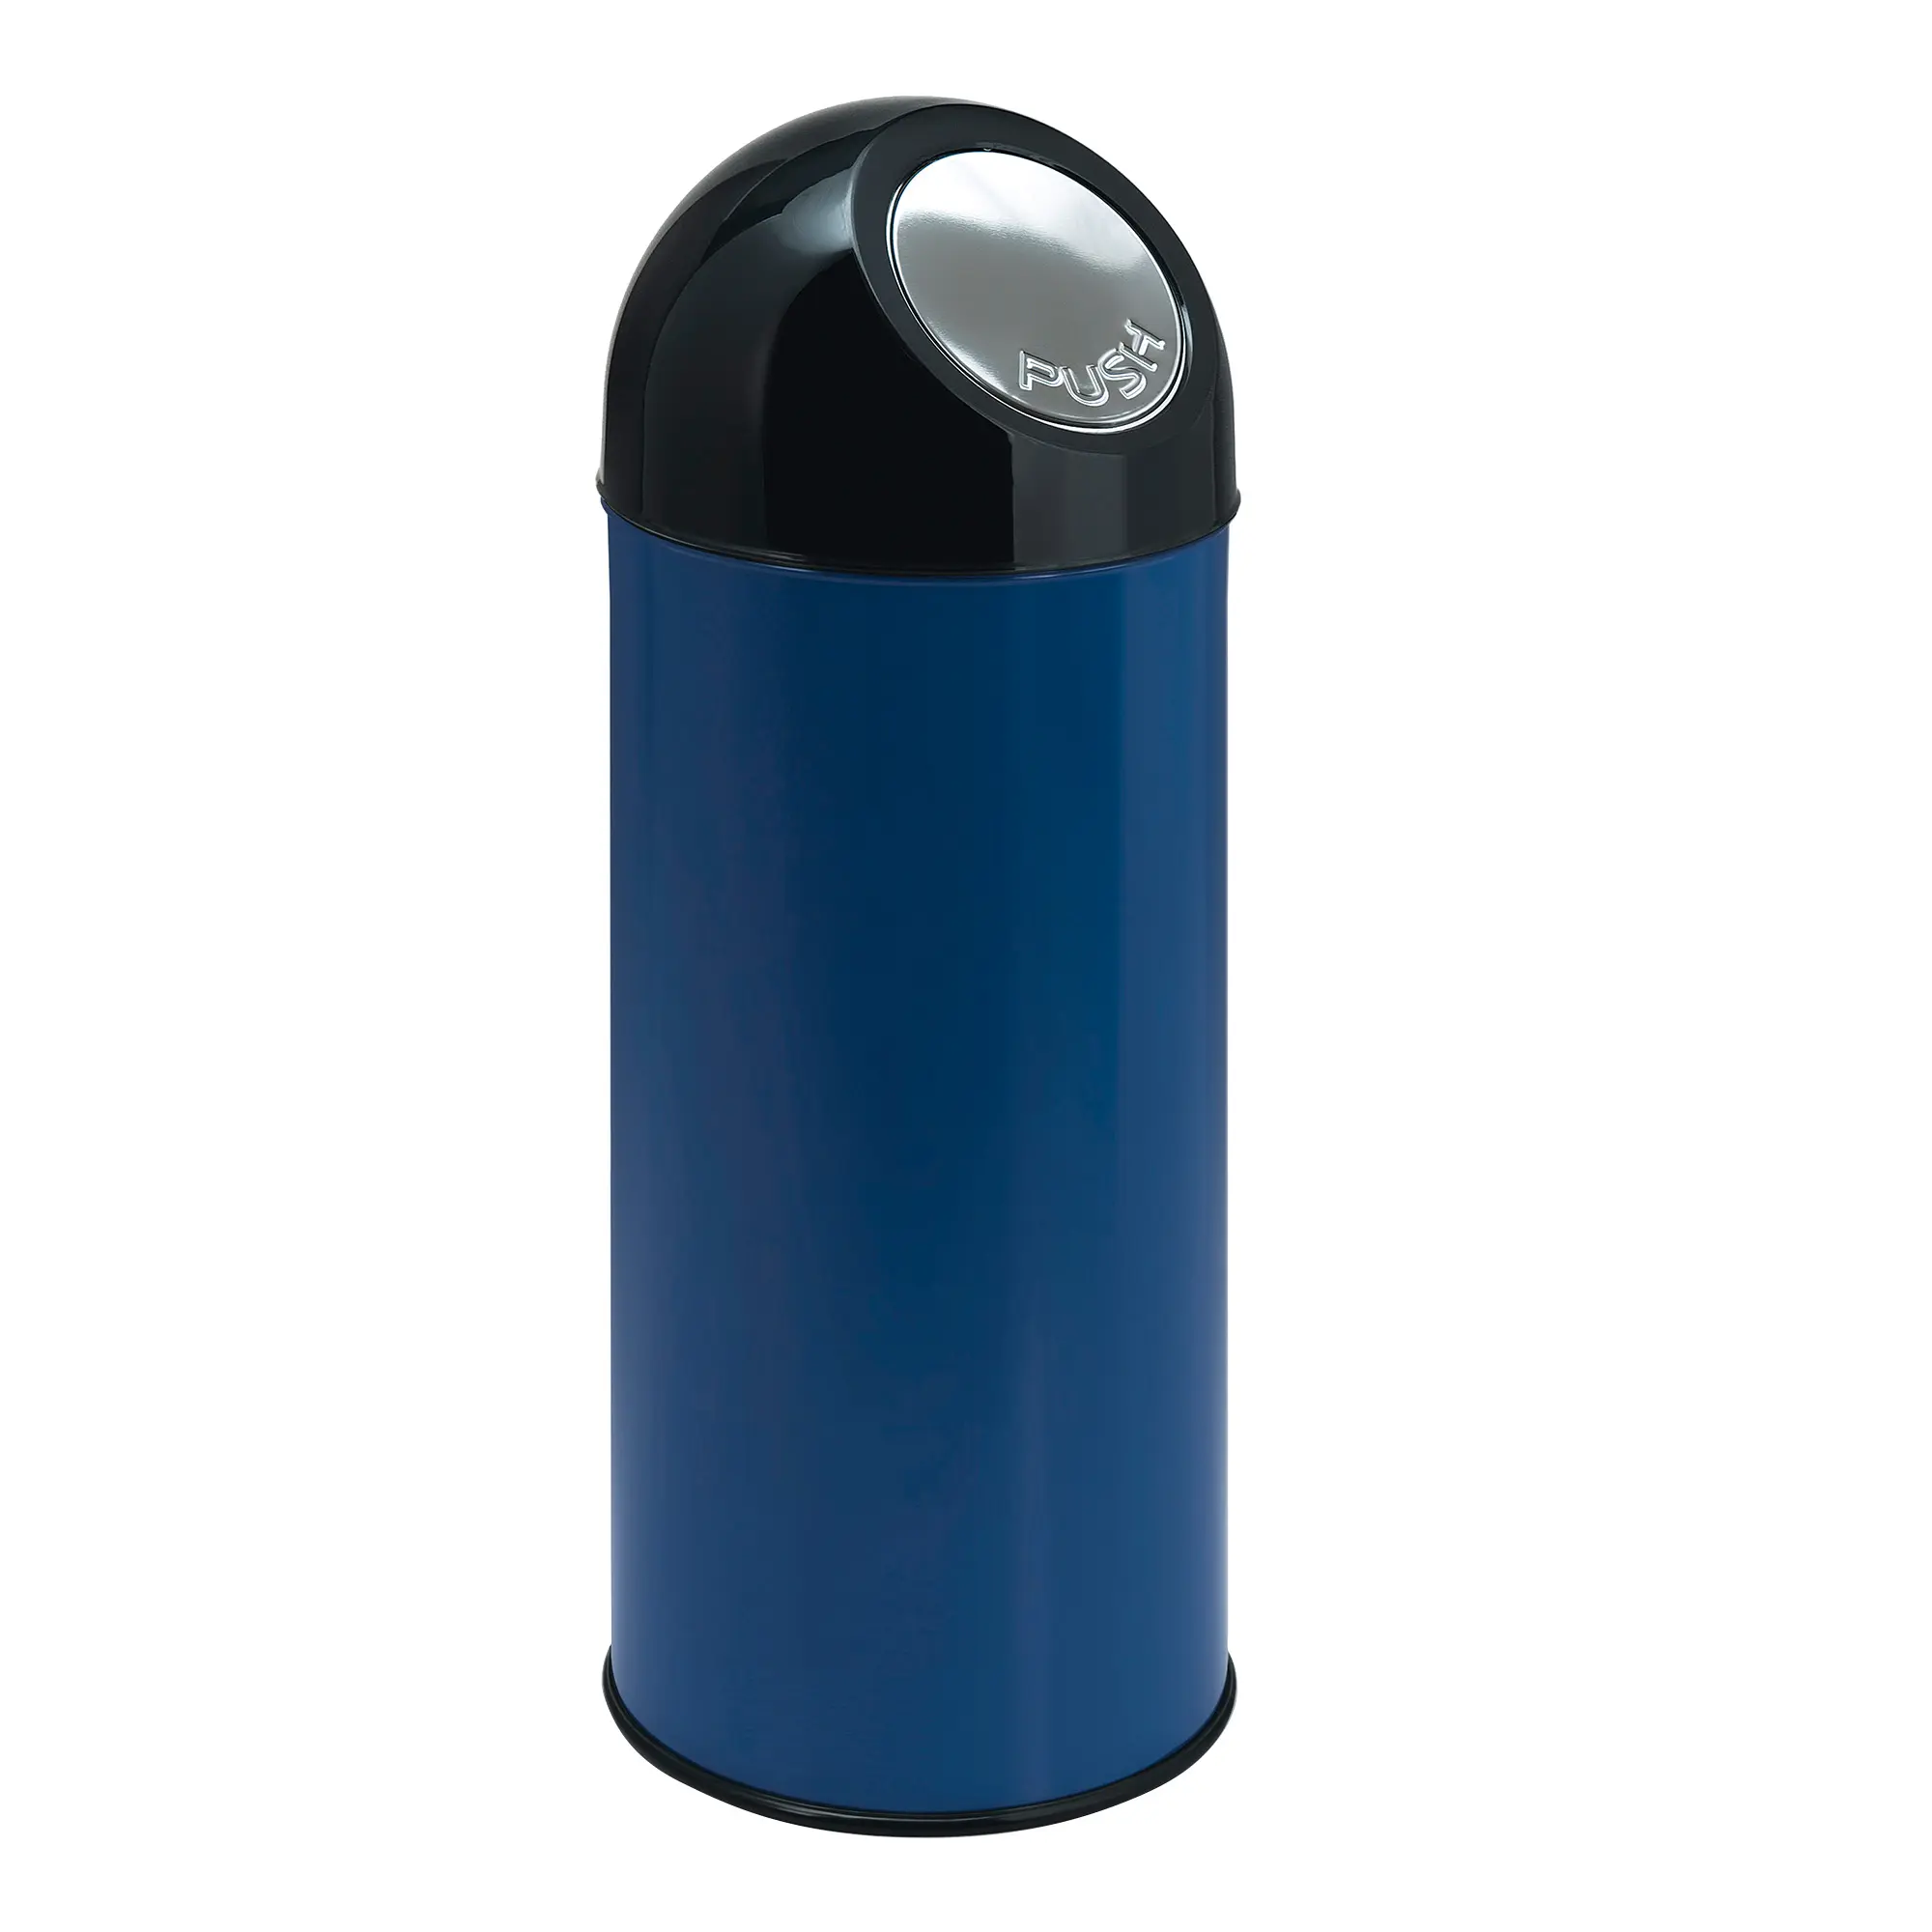 V-Part Abfallbehälter Edelstahl-Pushklappe 55 Liter blau/schwarz 31035793_1